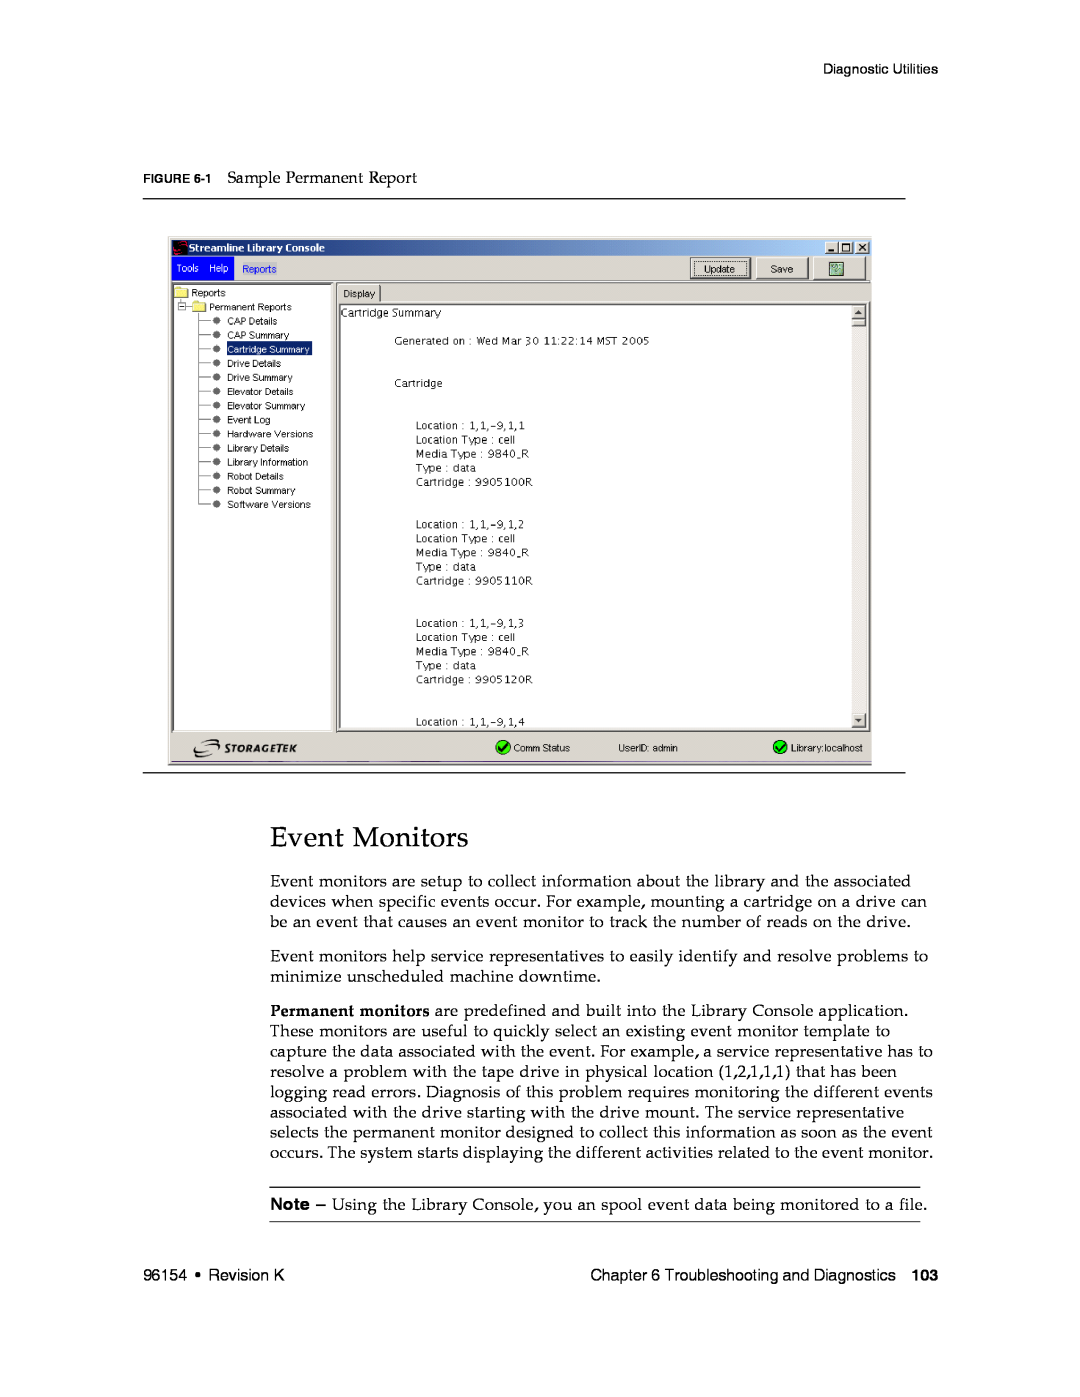 Sun Microsystems SL8500 manual Event Monitors, 1 Sample Permanent Report 